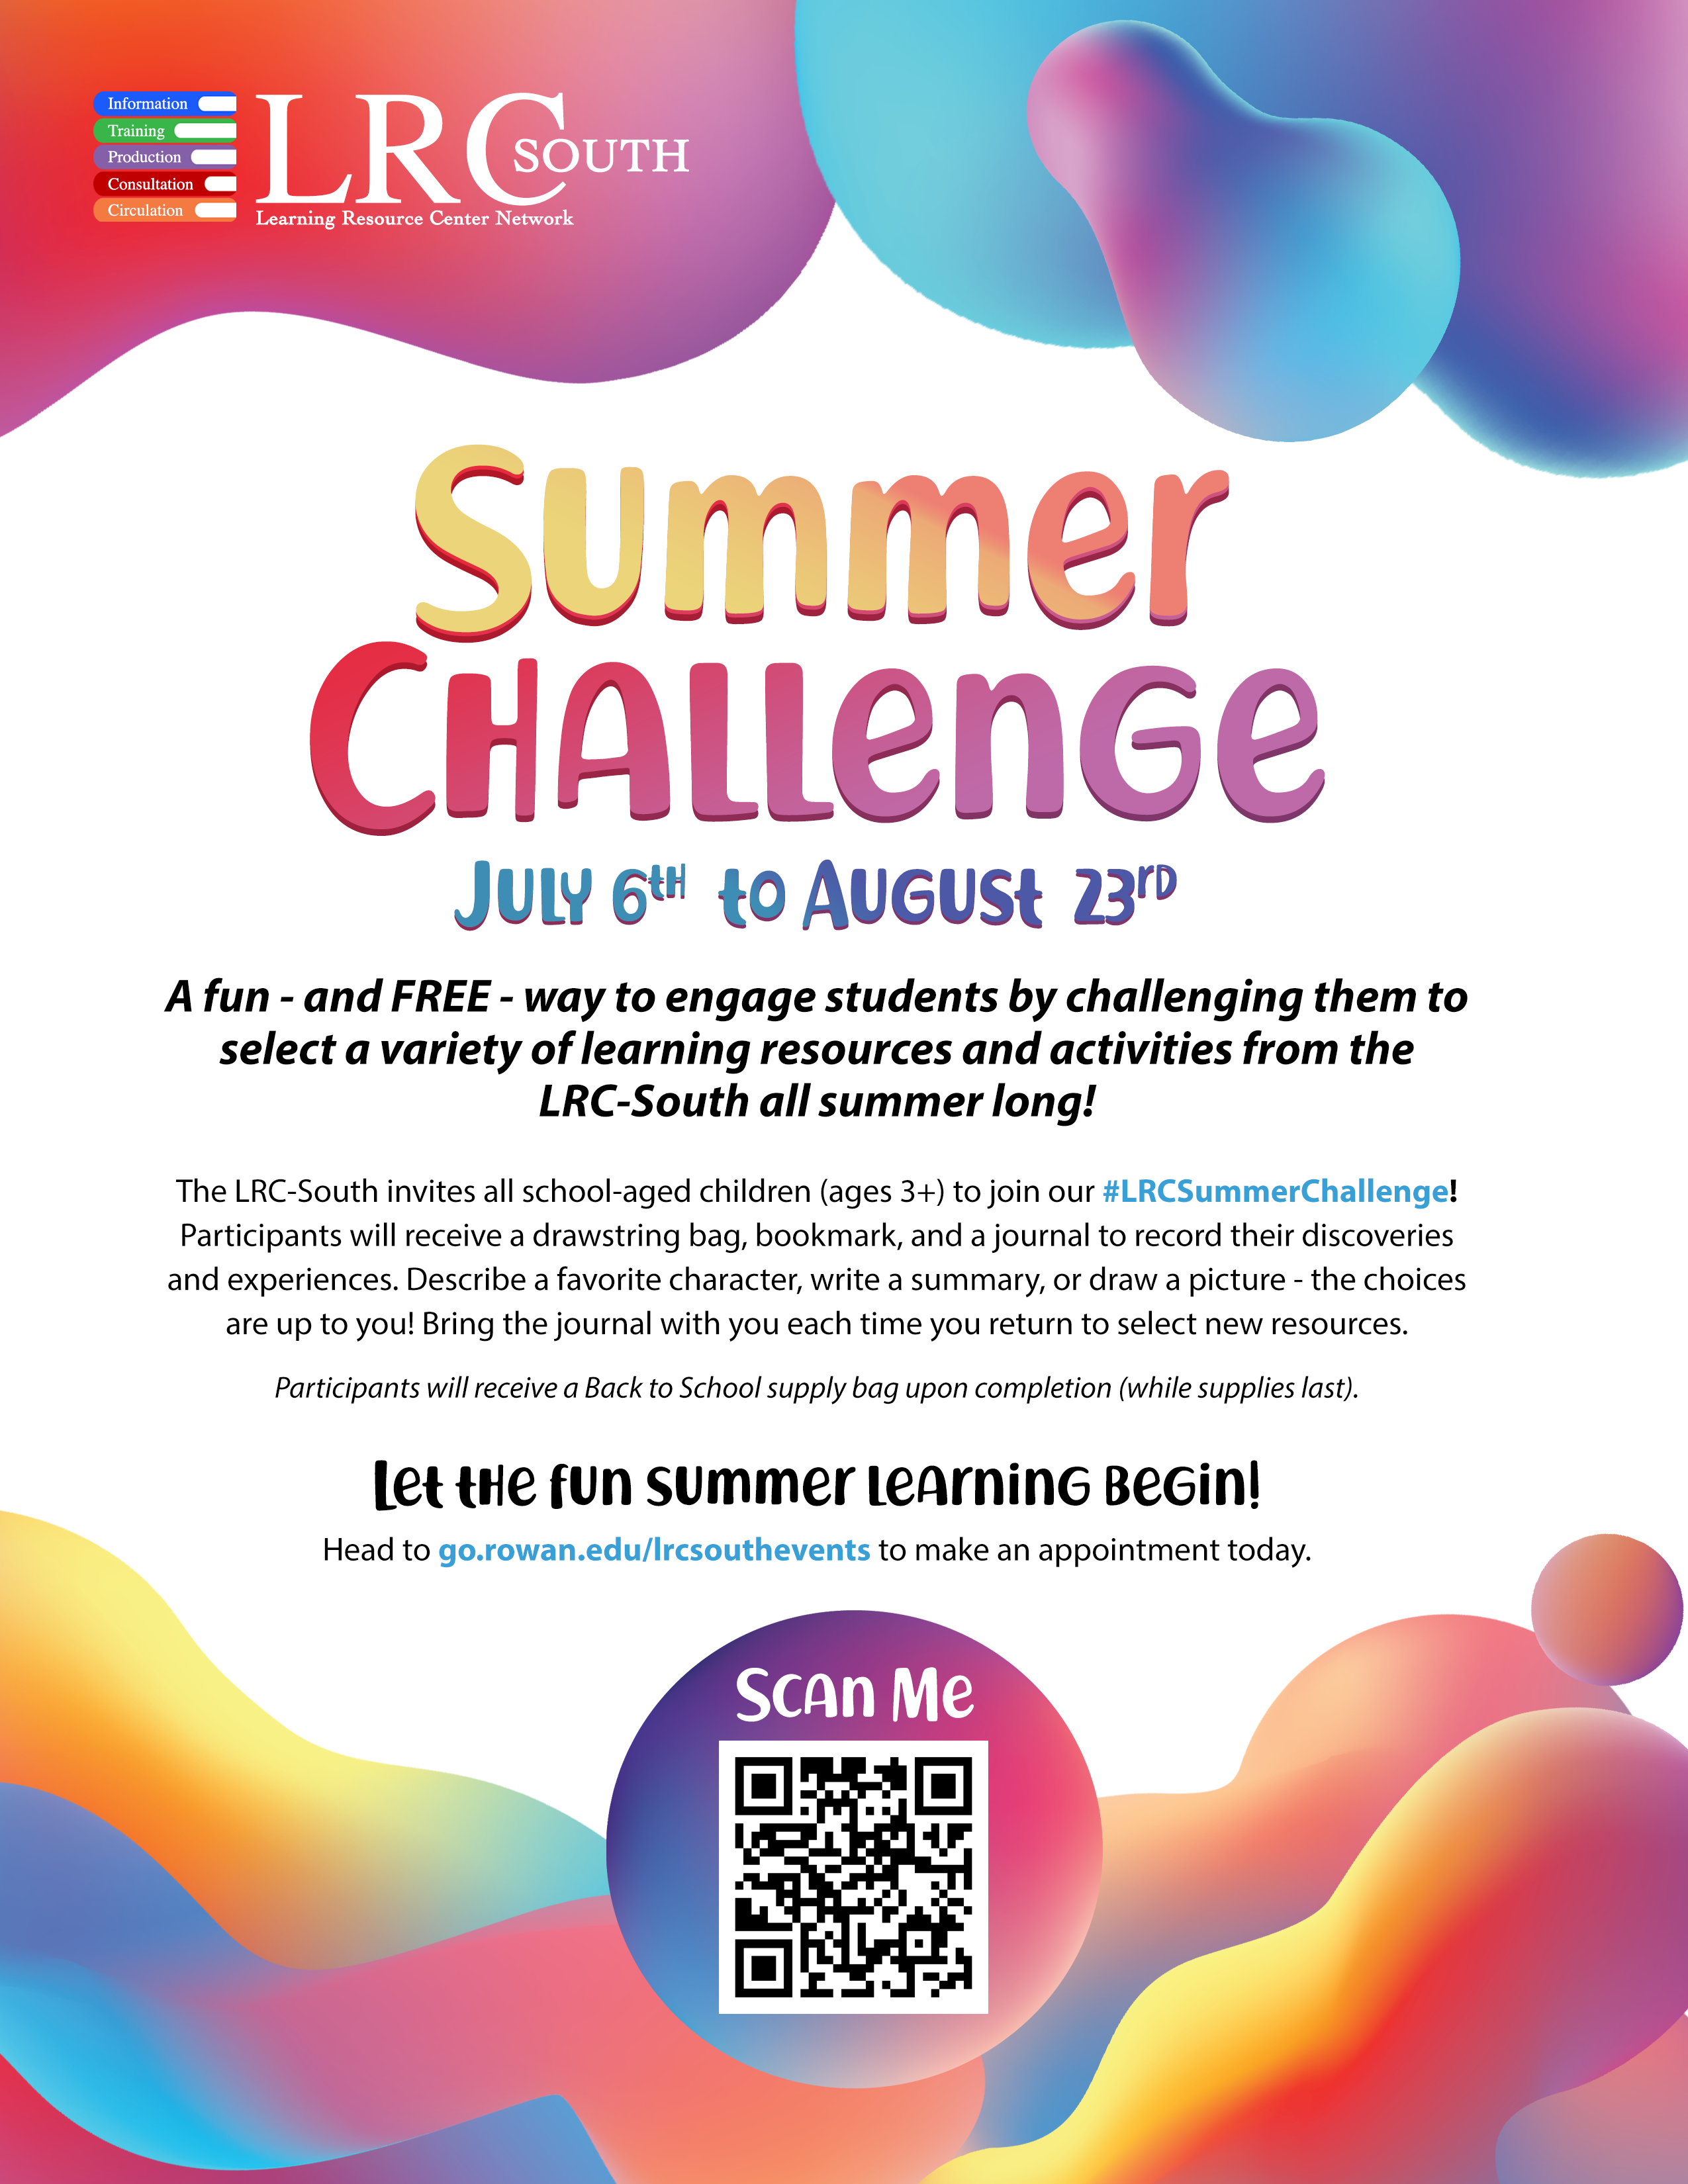 LRC-South Summer Challenge